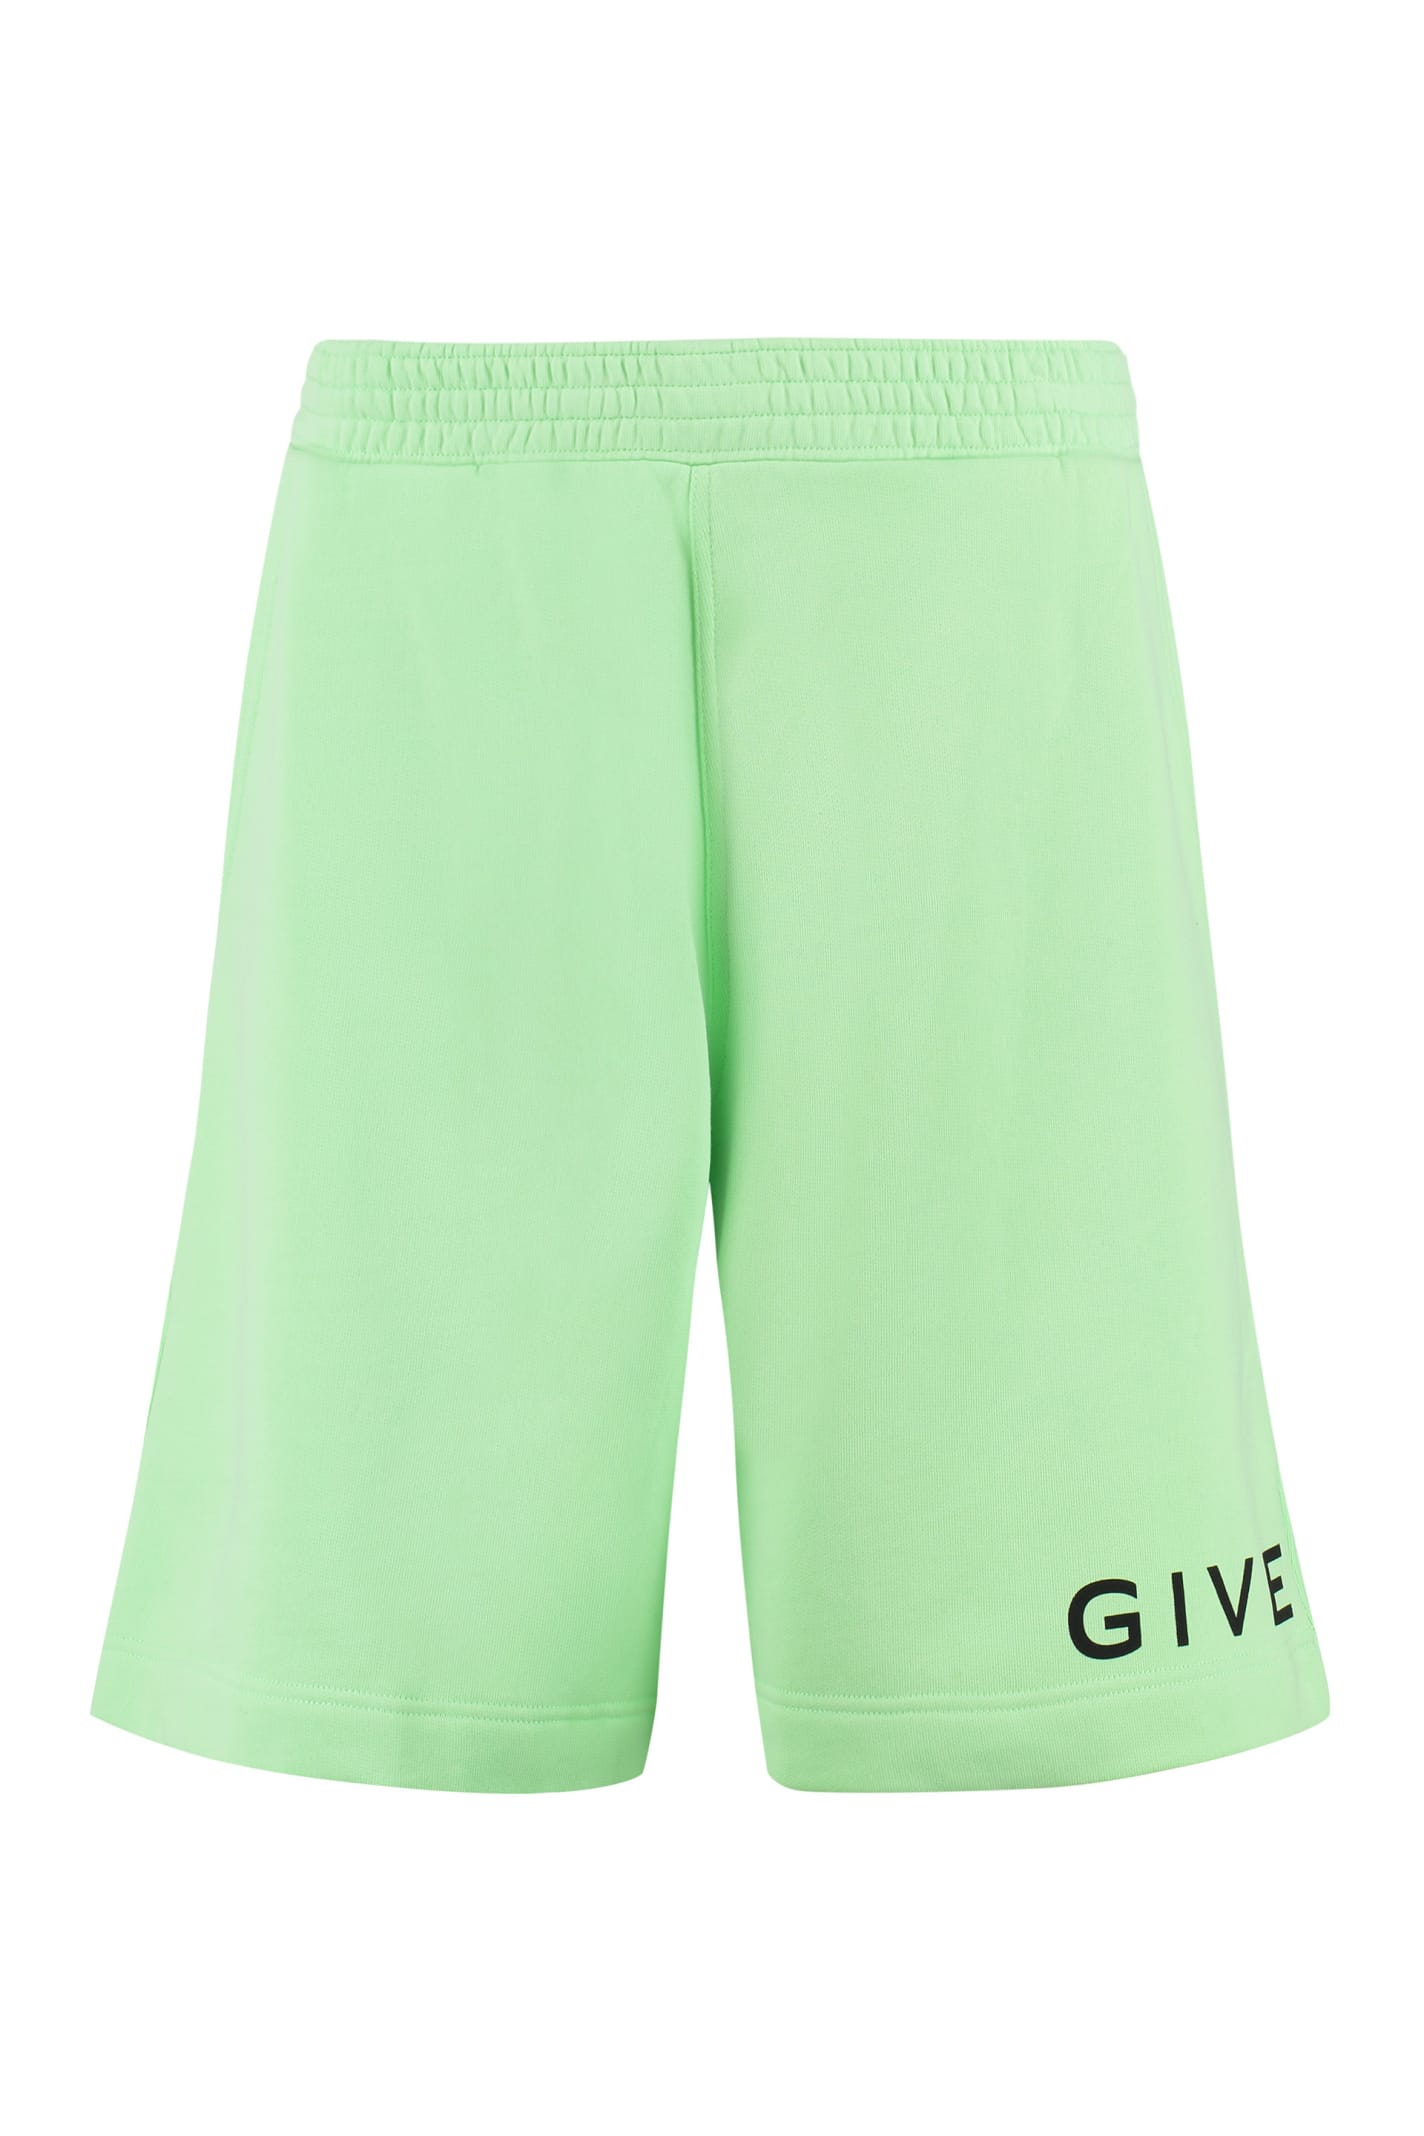 Givenchy Khaki Chito Edition Allover Family Boxing Shorts Givenchy